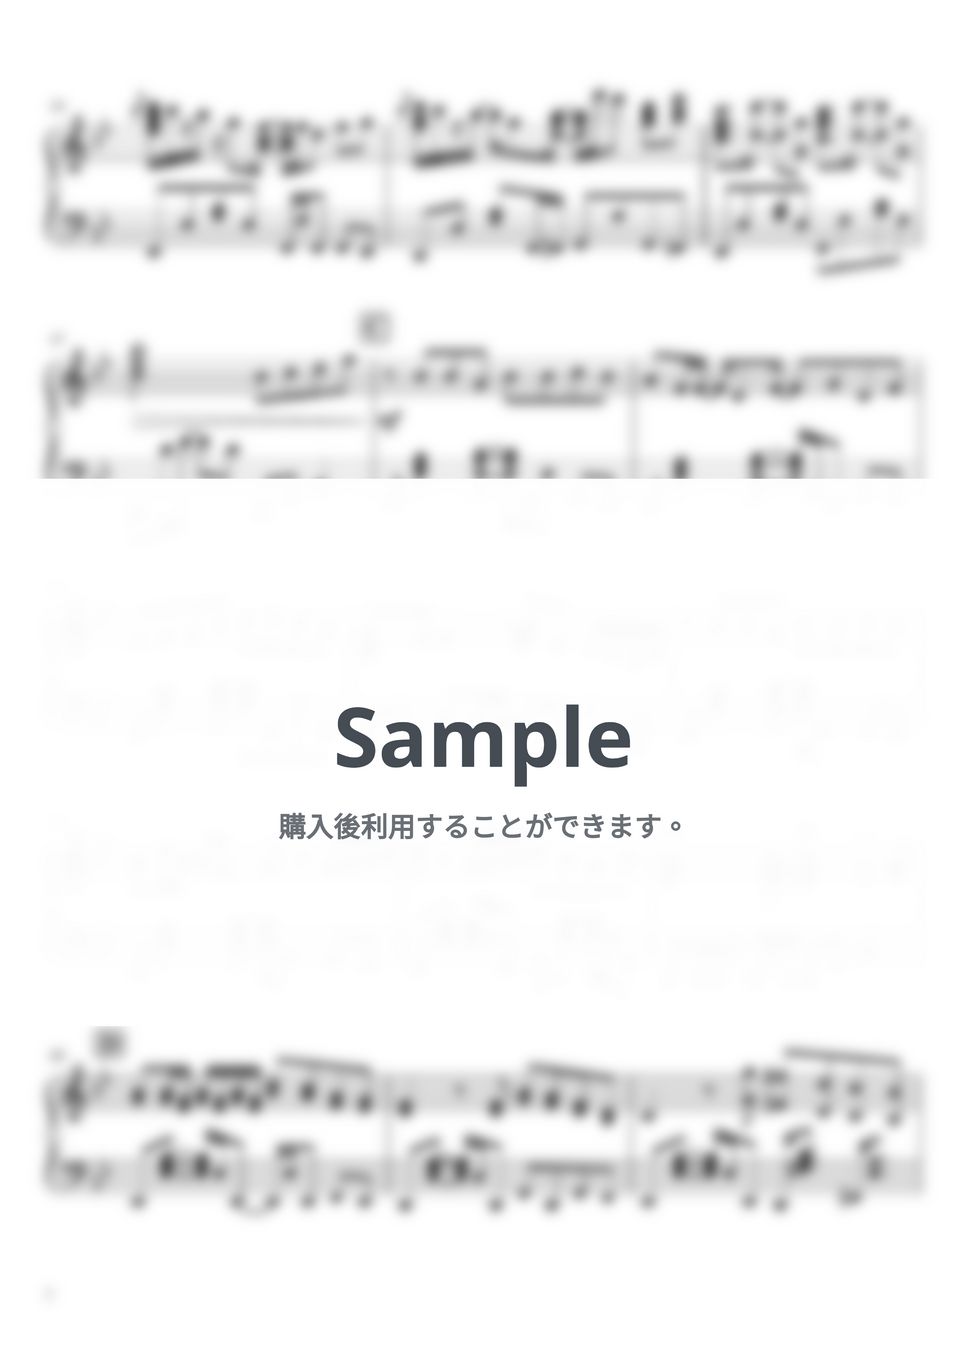 Ayase - 夜撫でるメノウ (ピアノソロ / 上級) by SuperMomoFactory